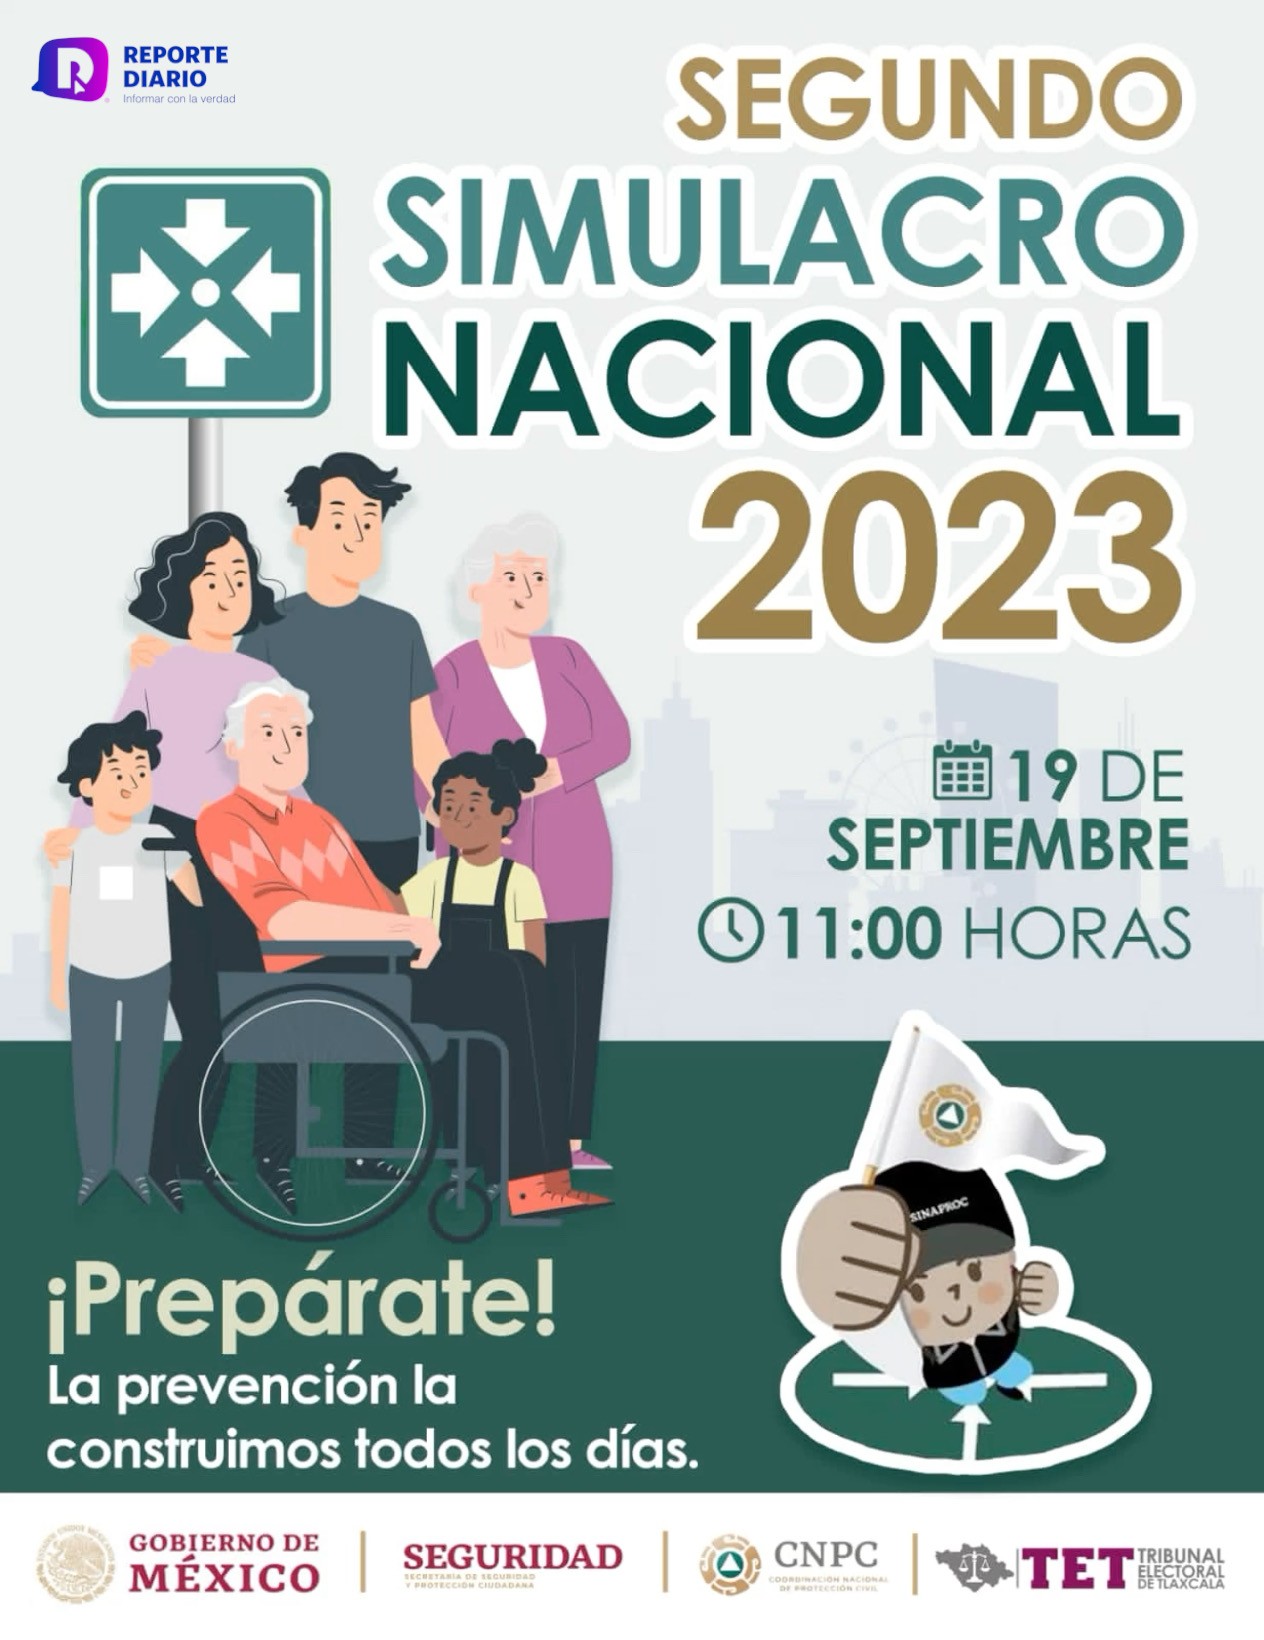 Segundo Simulacro Nacional 2023 Reporte Diario Vallarta